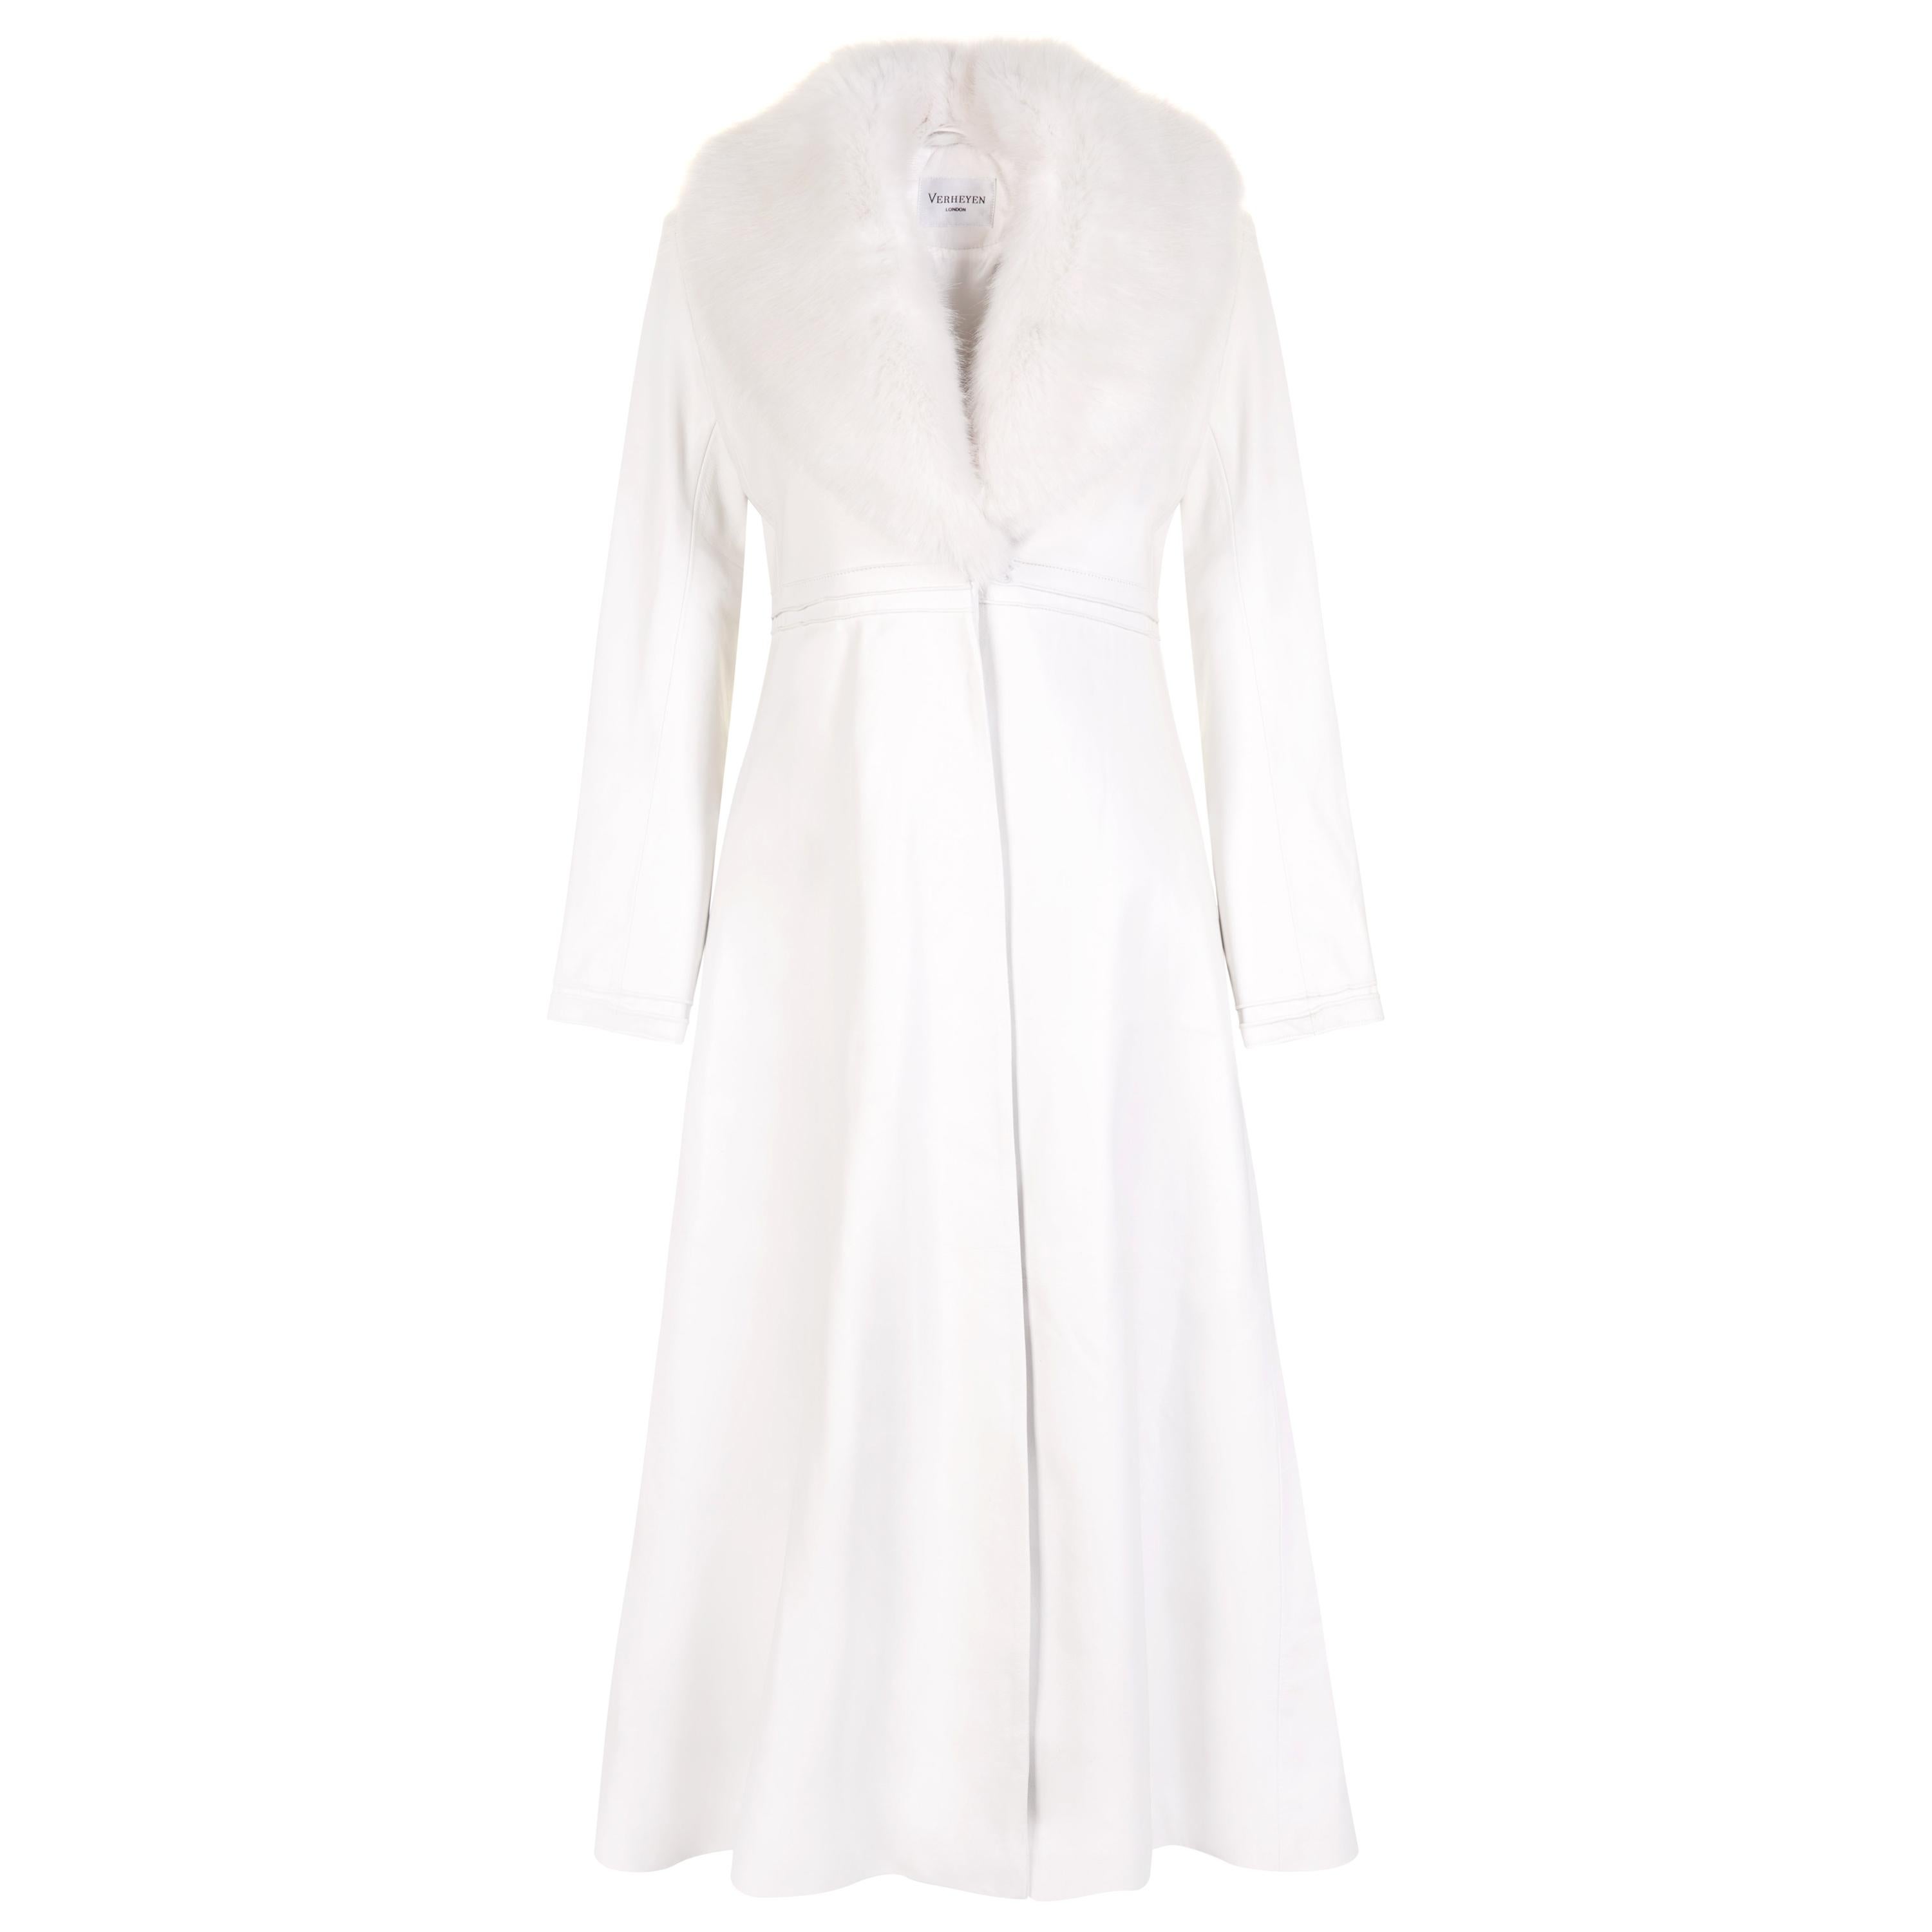 Verheyen London Edward Leather Coat in White with Faux Fur - Size uk 6 (Manteau en cuir blanc avec fausse fourrure) 